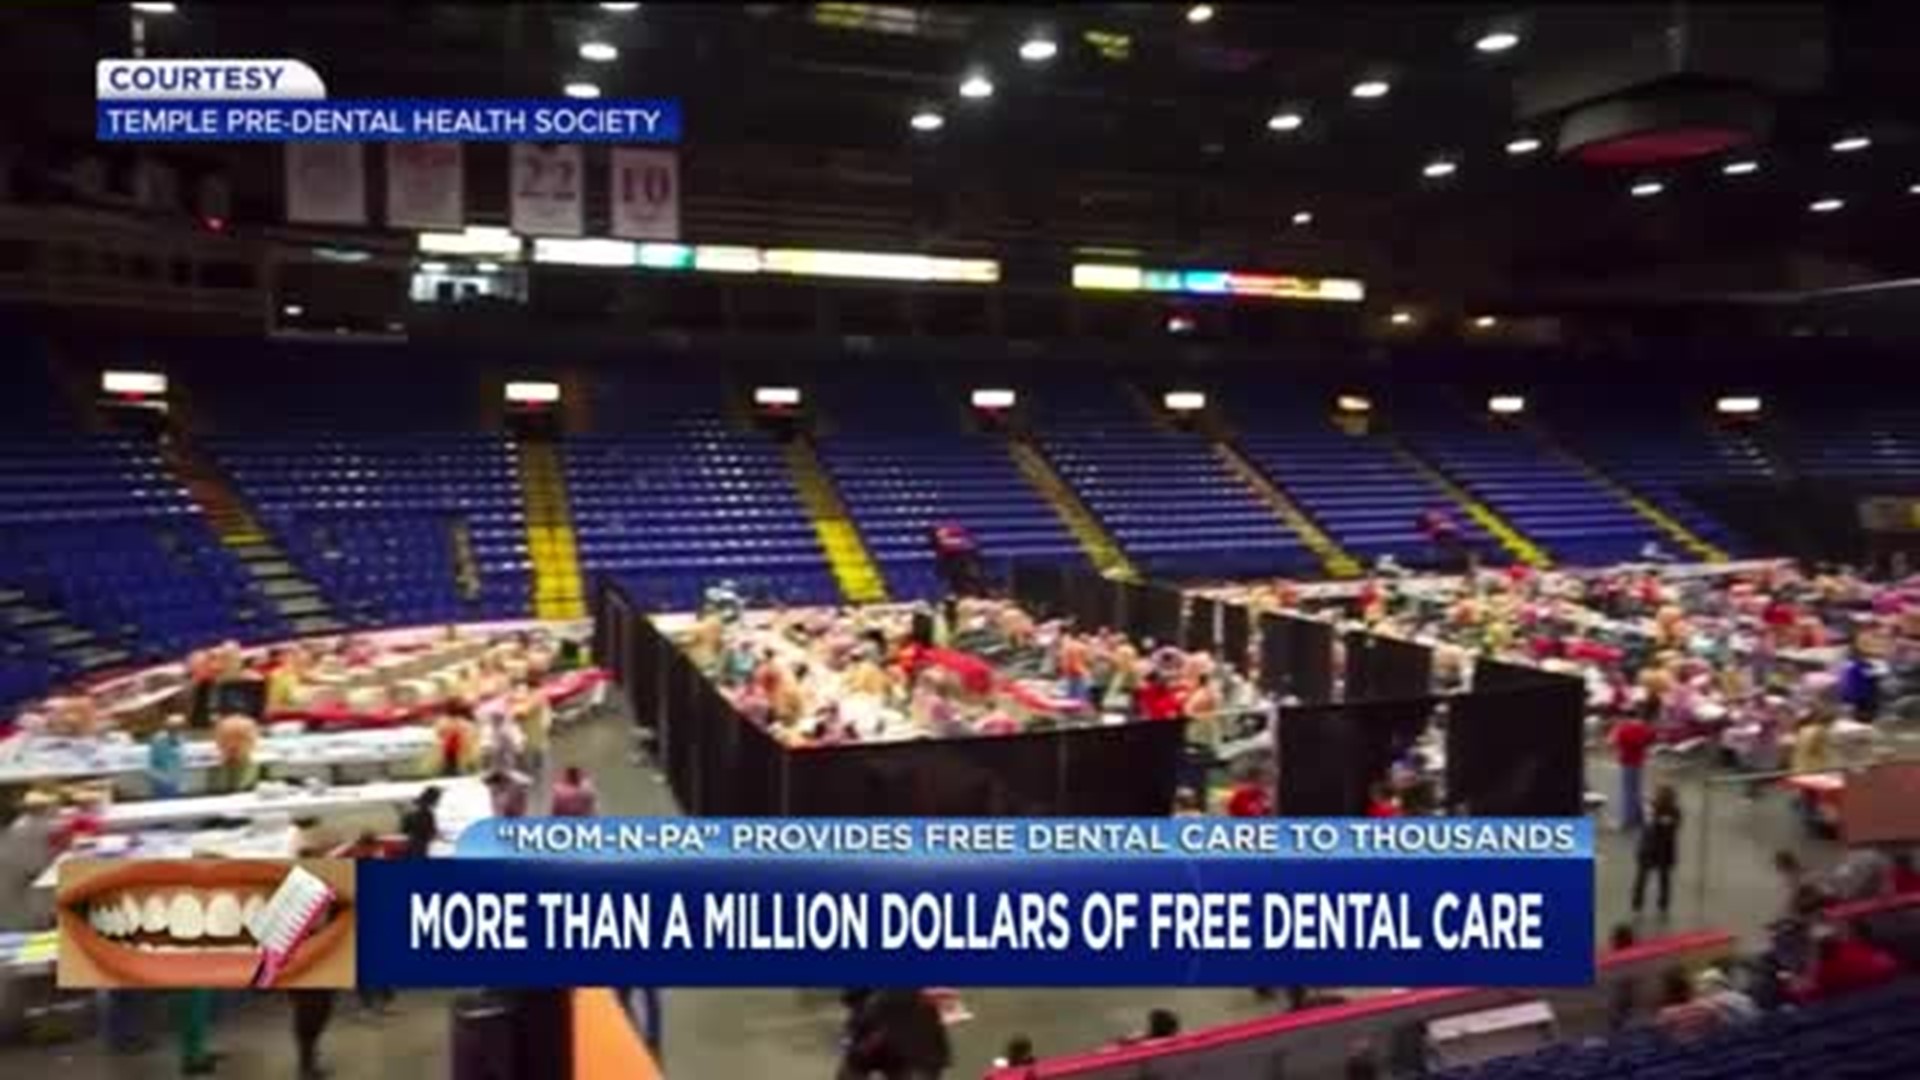 Providing Free Dental Care to Thousands